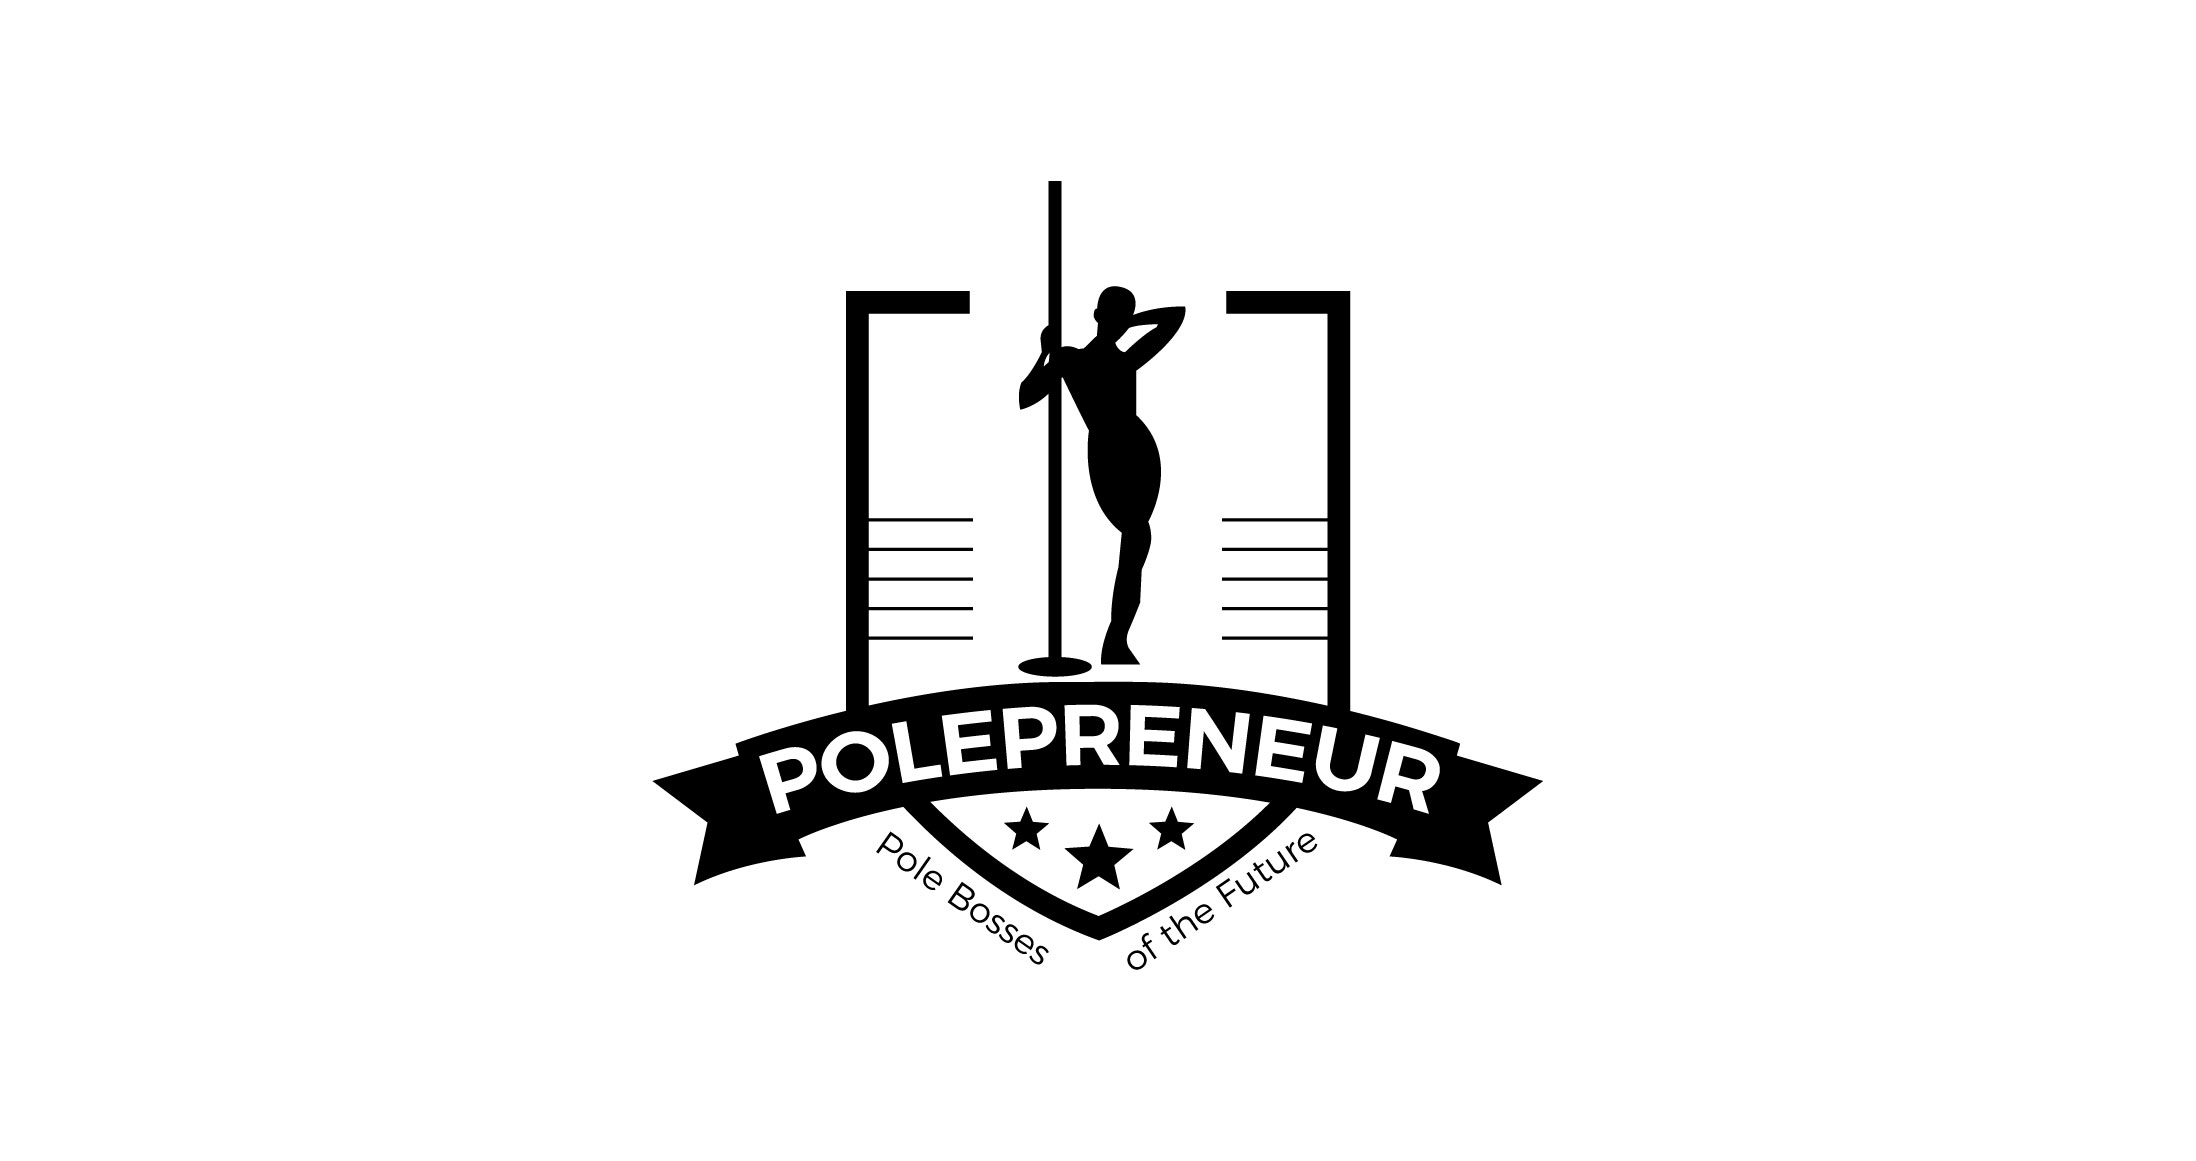 www.polepreneur.com